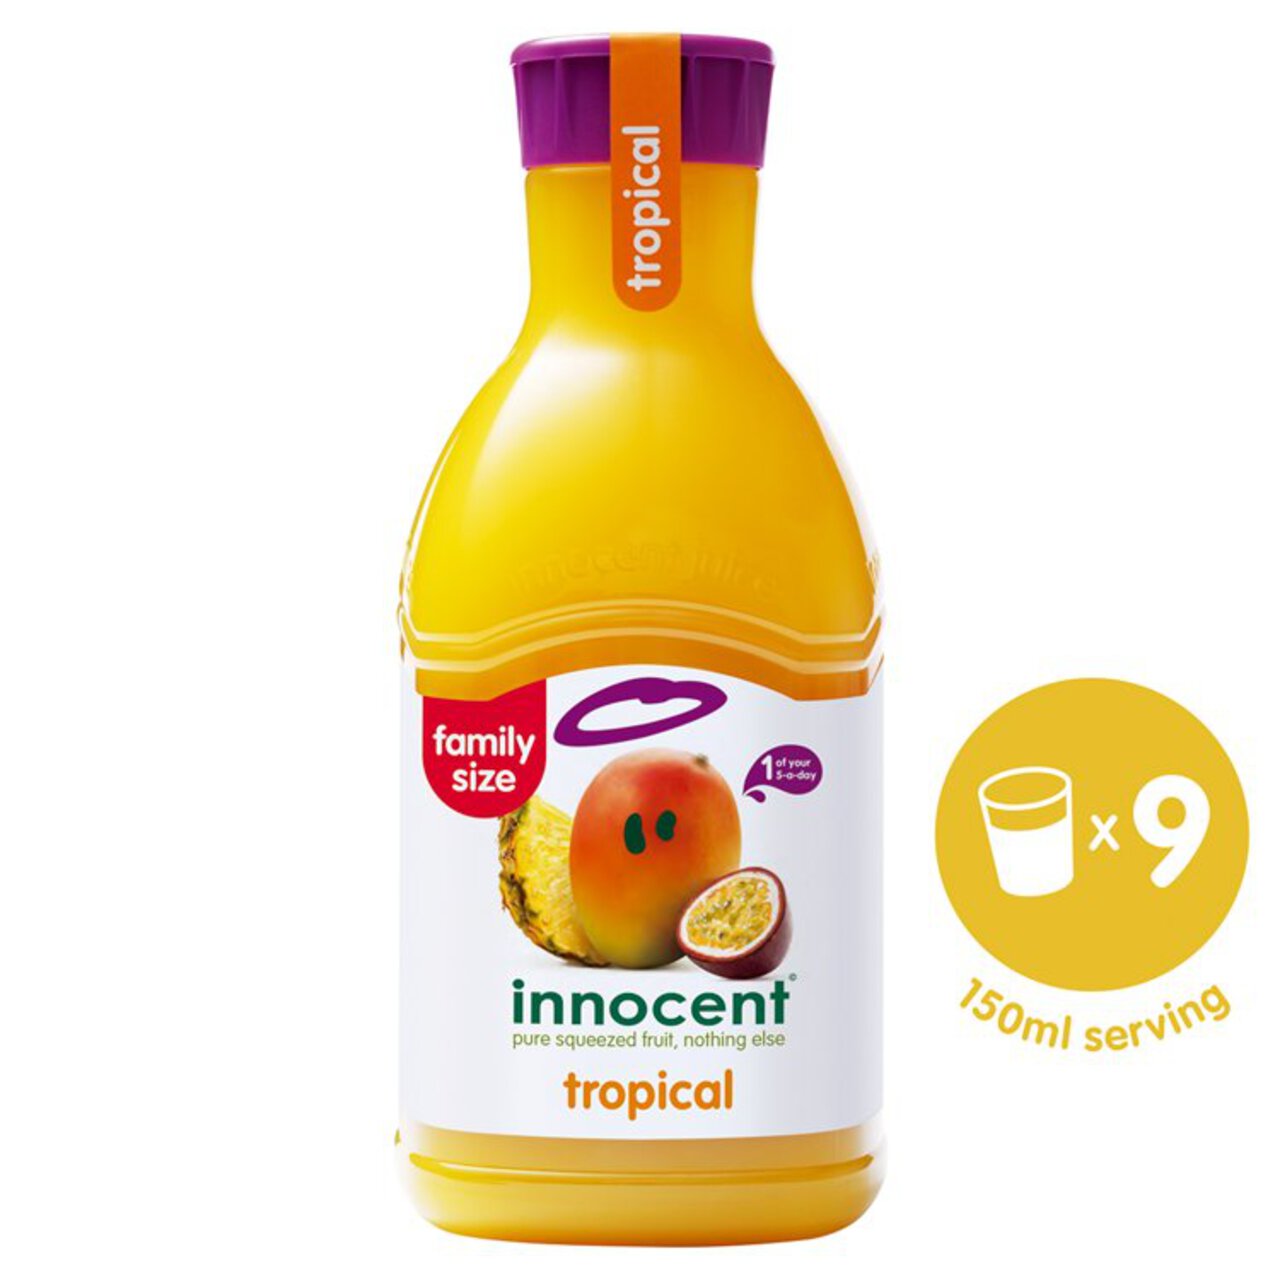 Innocent Tropical Juice 1.35l